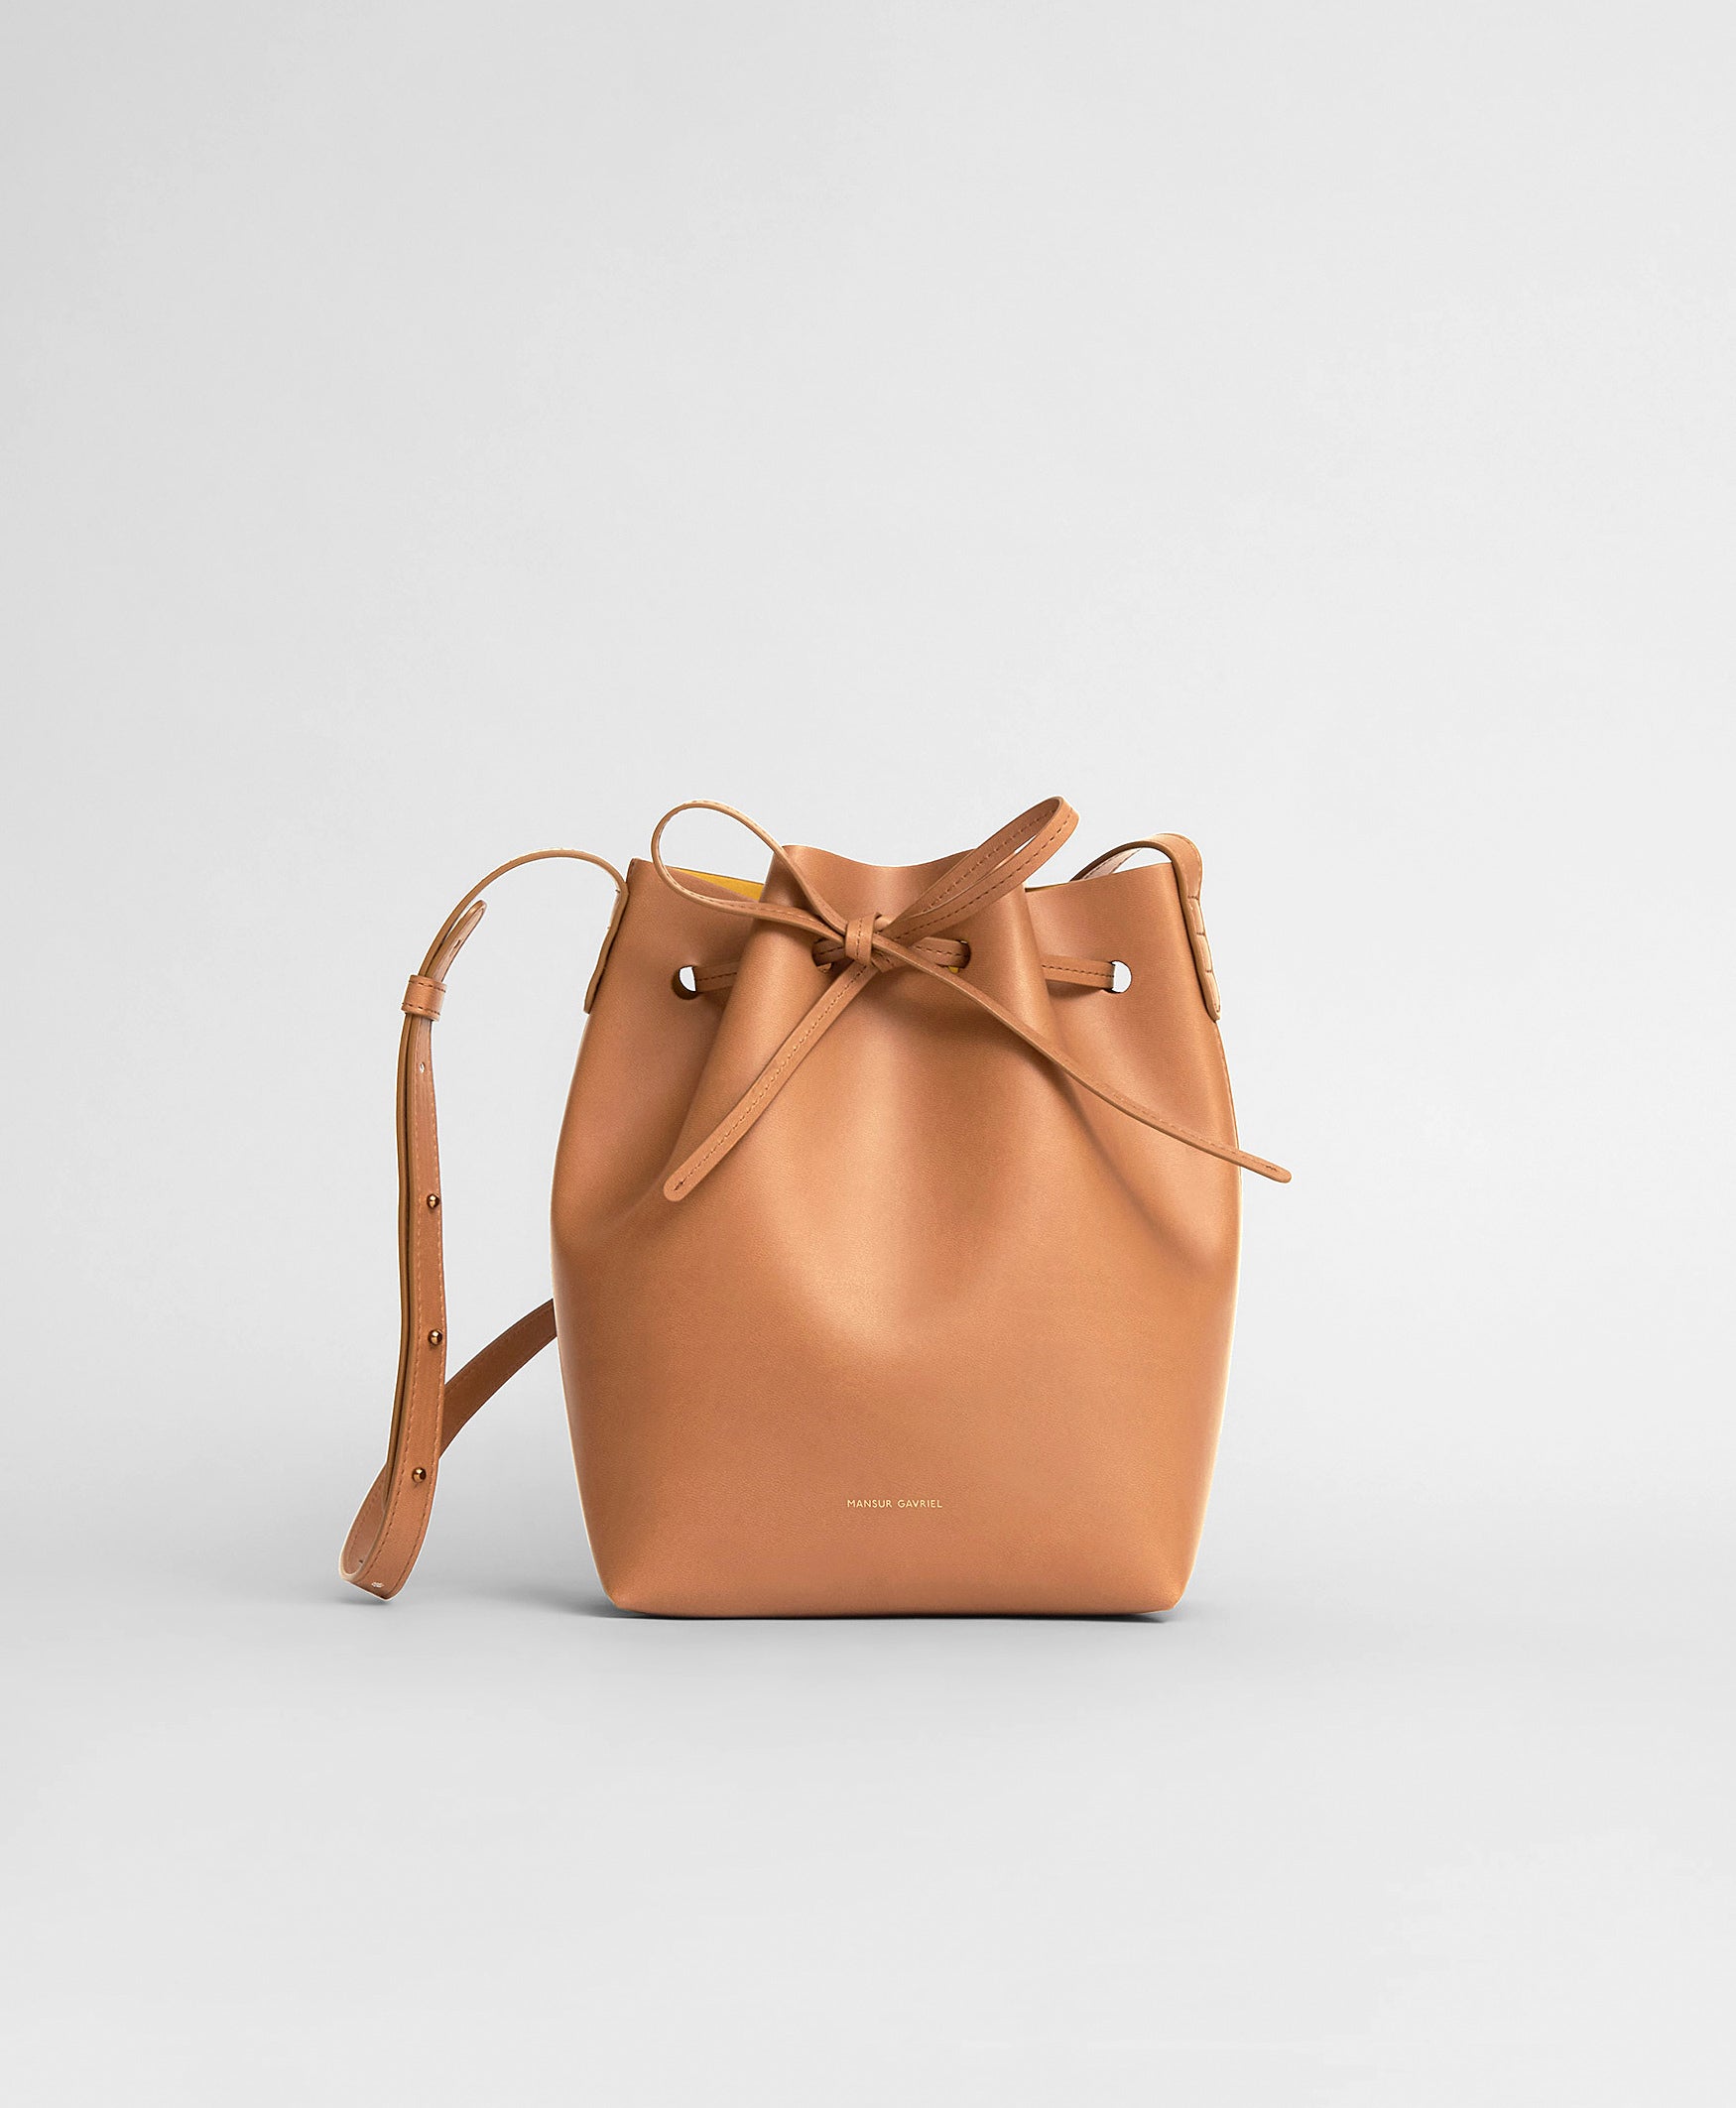 Mansur Gavriel New Apple Leather Bucket Bag Review